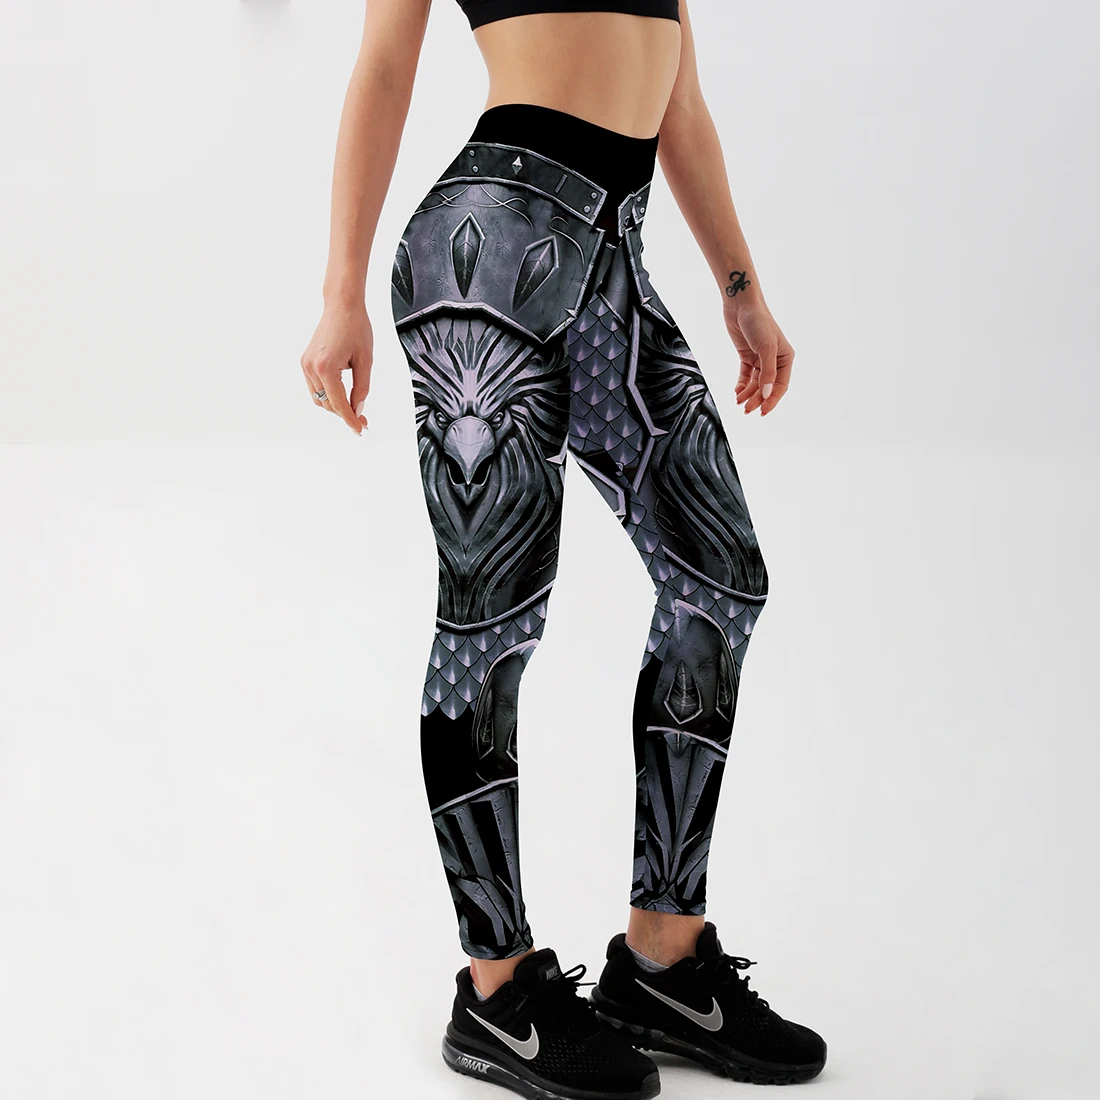 

Qickitout Leggings New Arrival Women's Steel Armor Aagle Dark Leggings Digital Print Pants Trousers Stretch Pants Plus Size